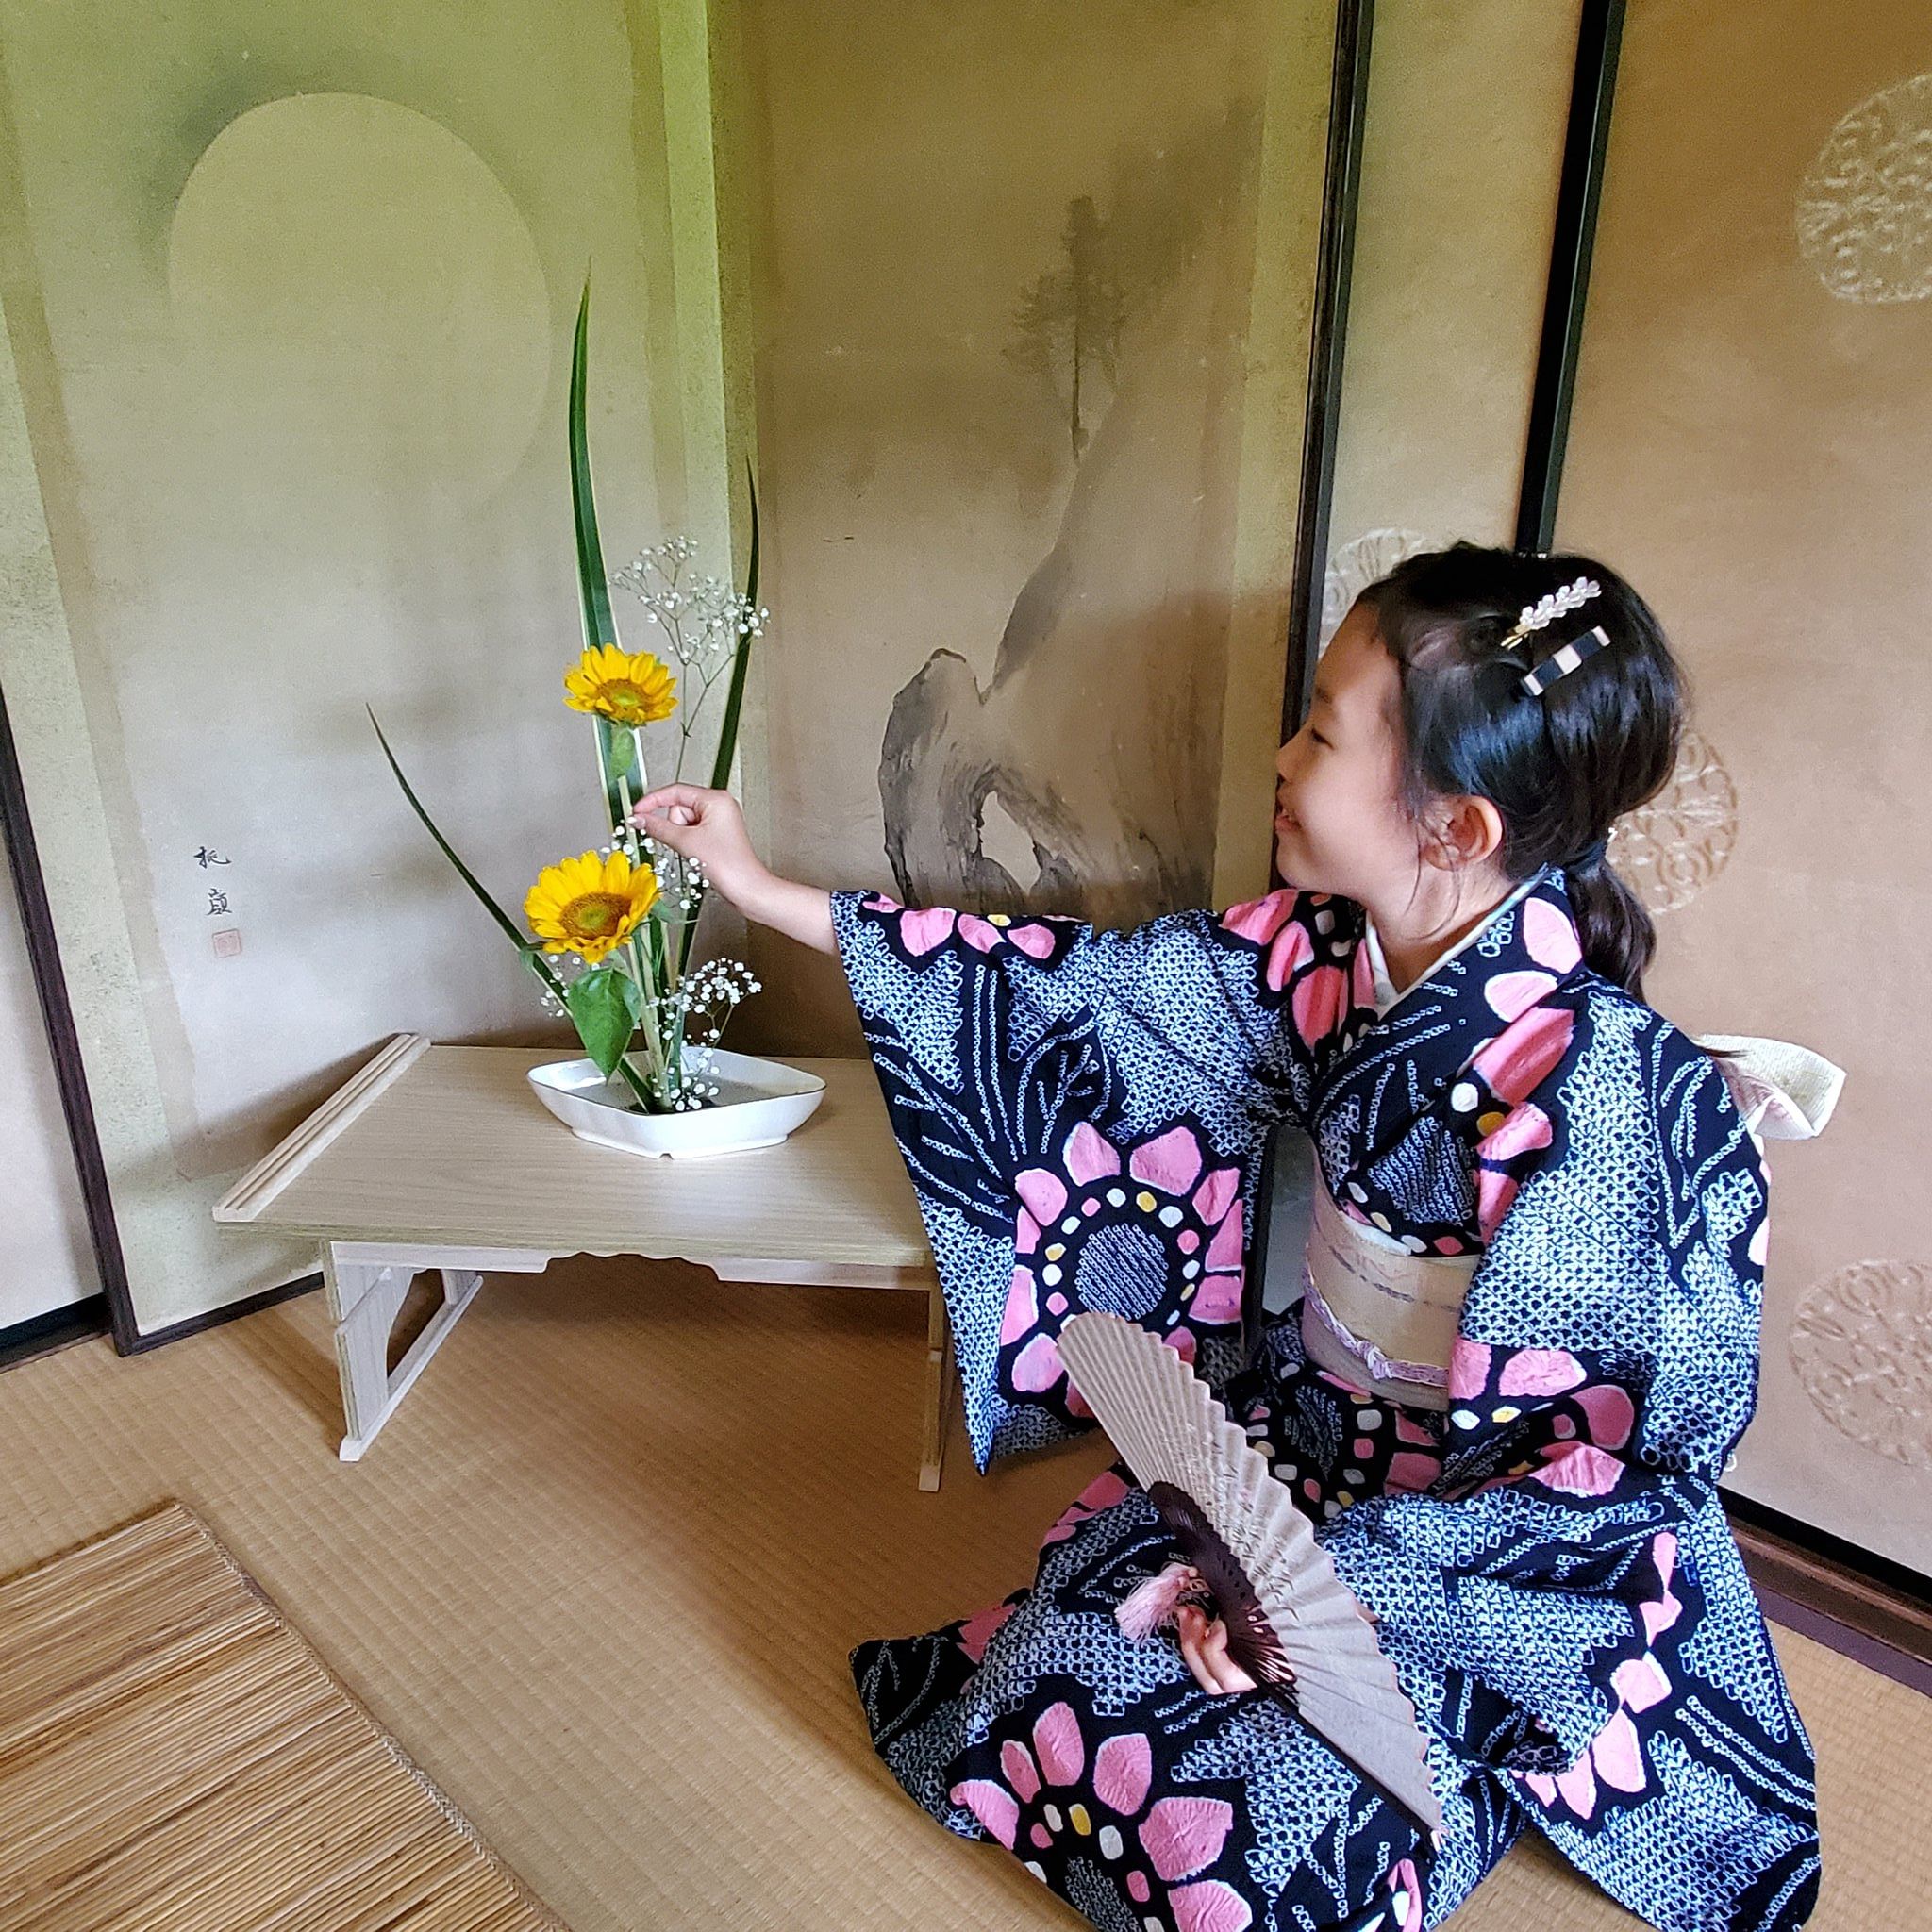 Flower Teahouse - Shared Tea Ceremony Experience